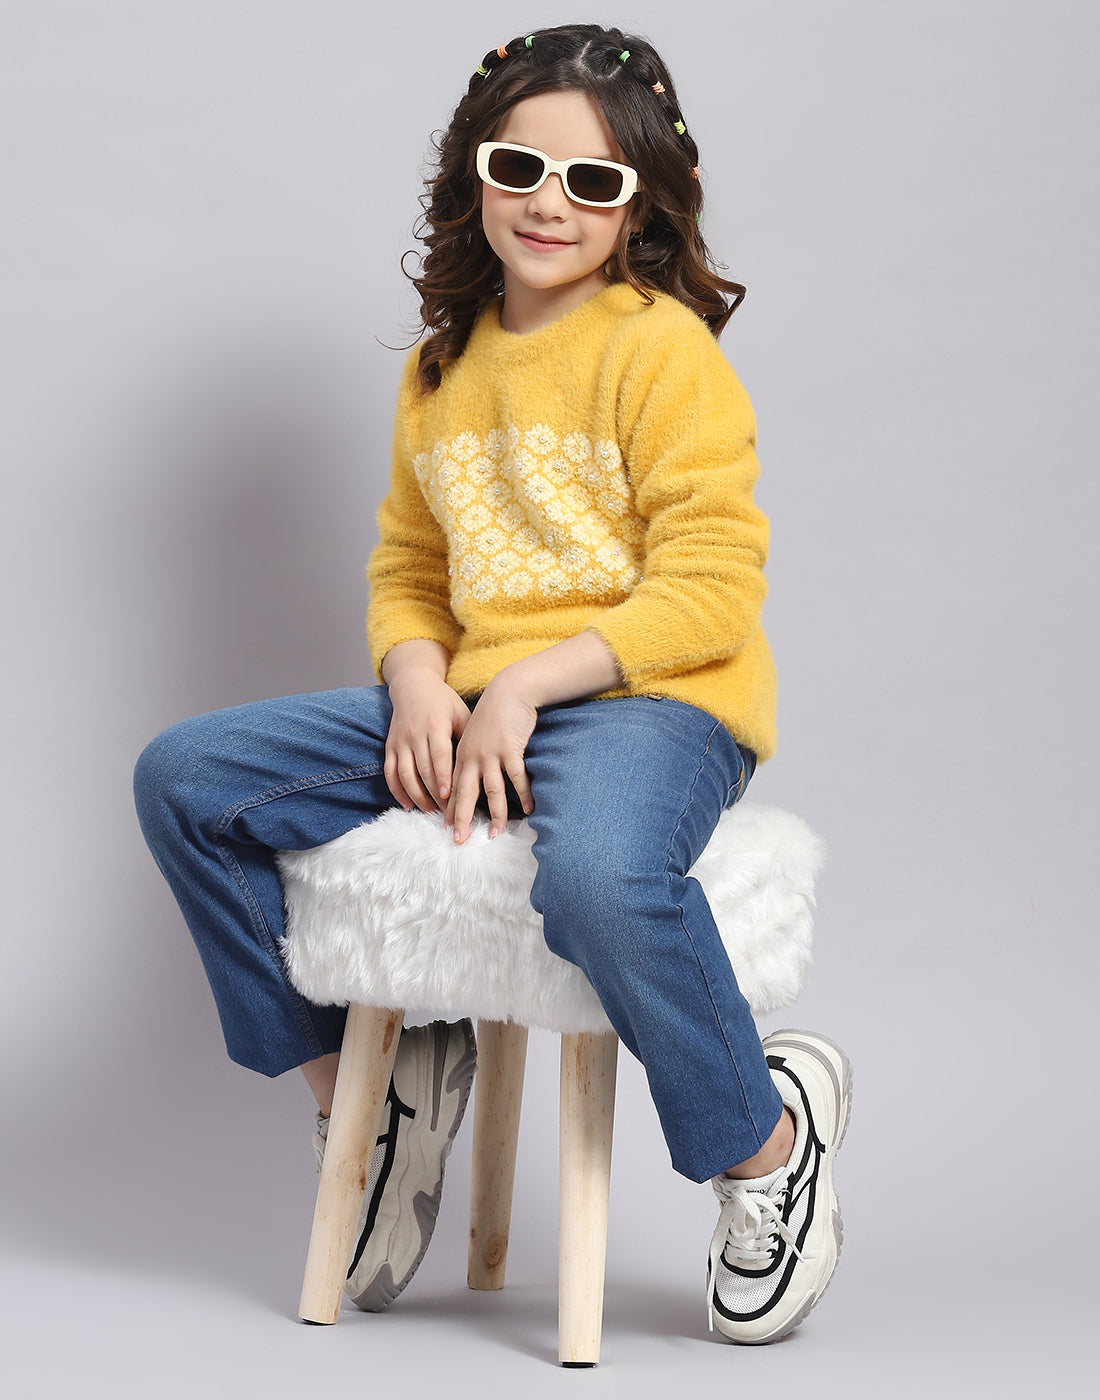 Girls Mustard Self Design Round Neck Full Sleeve Sweater